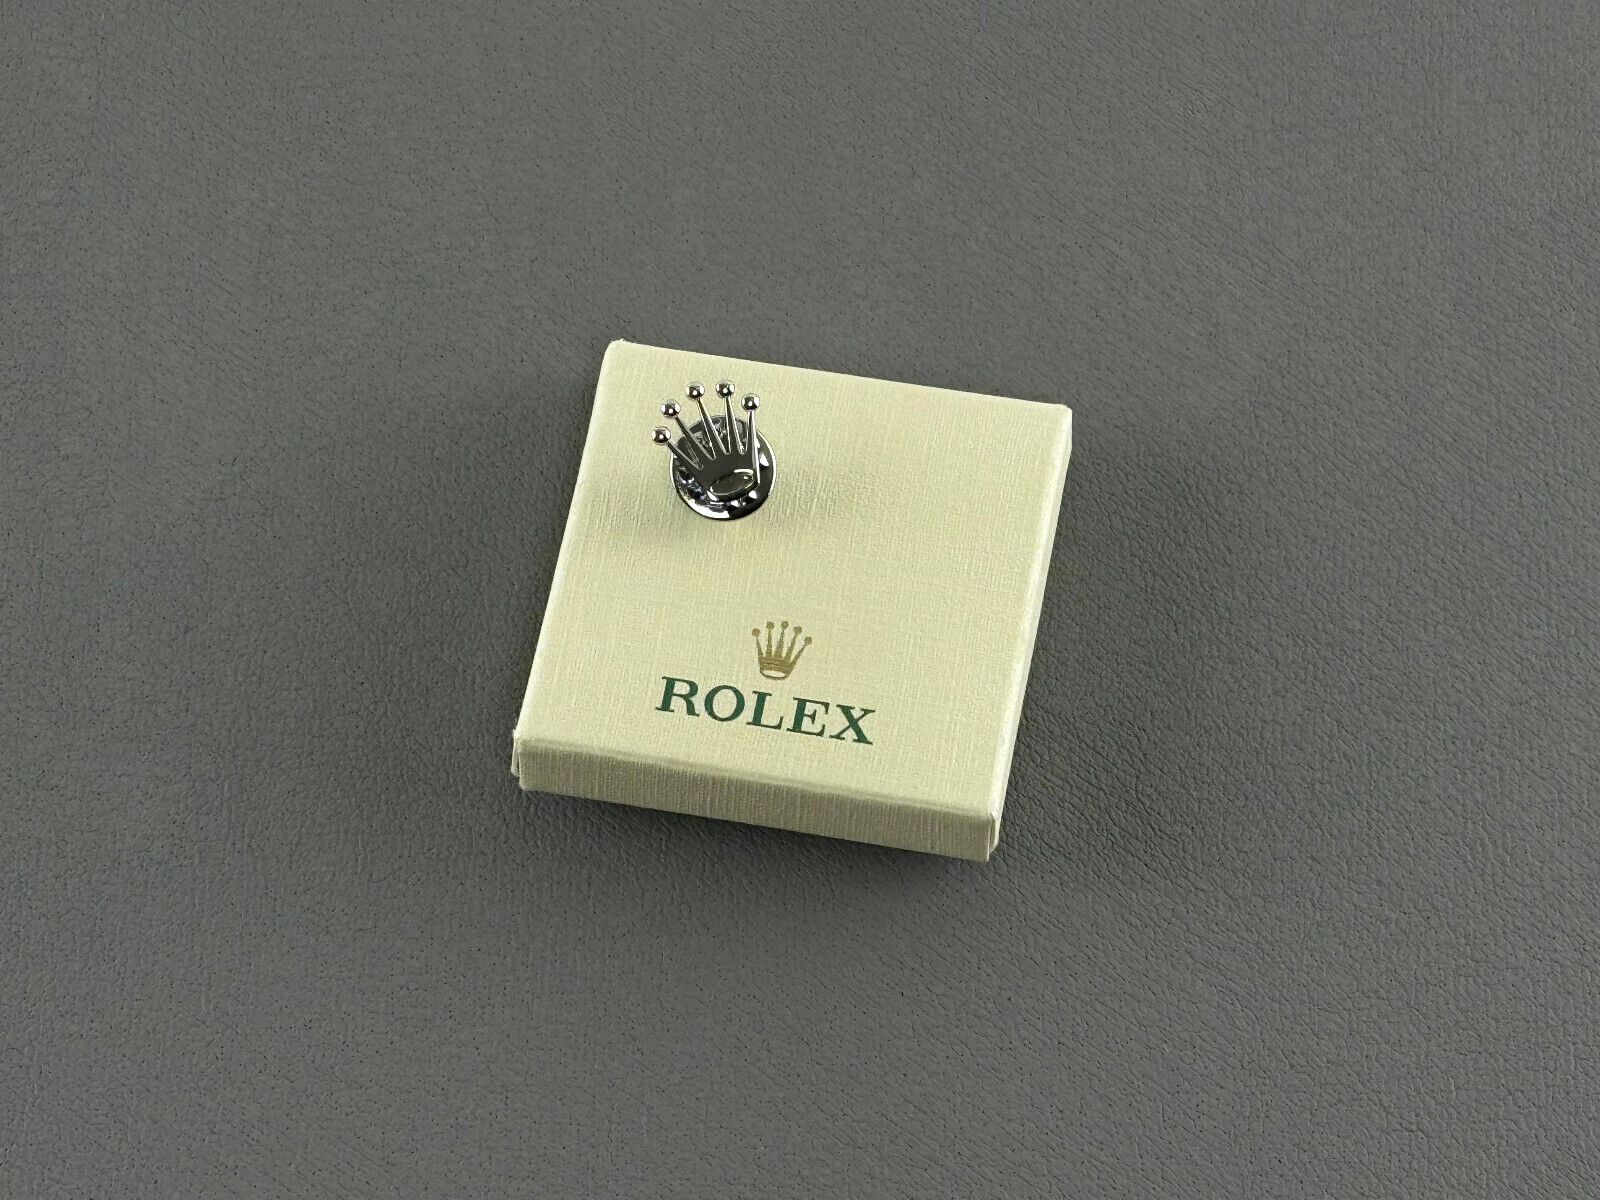 Rolex Anstecknadel Silber